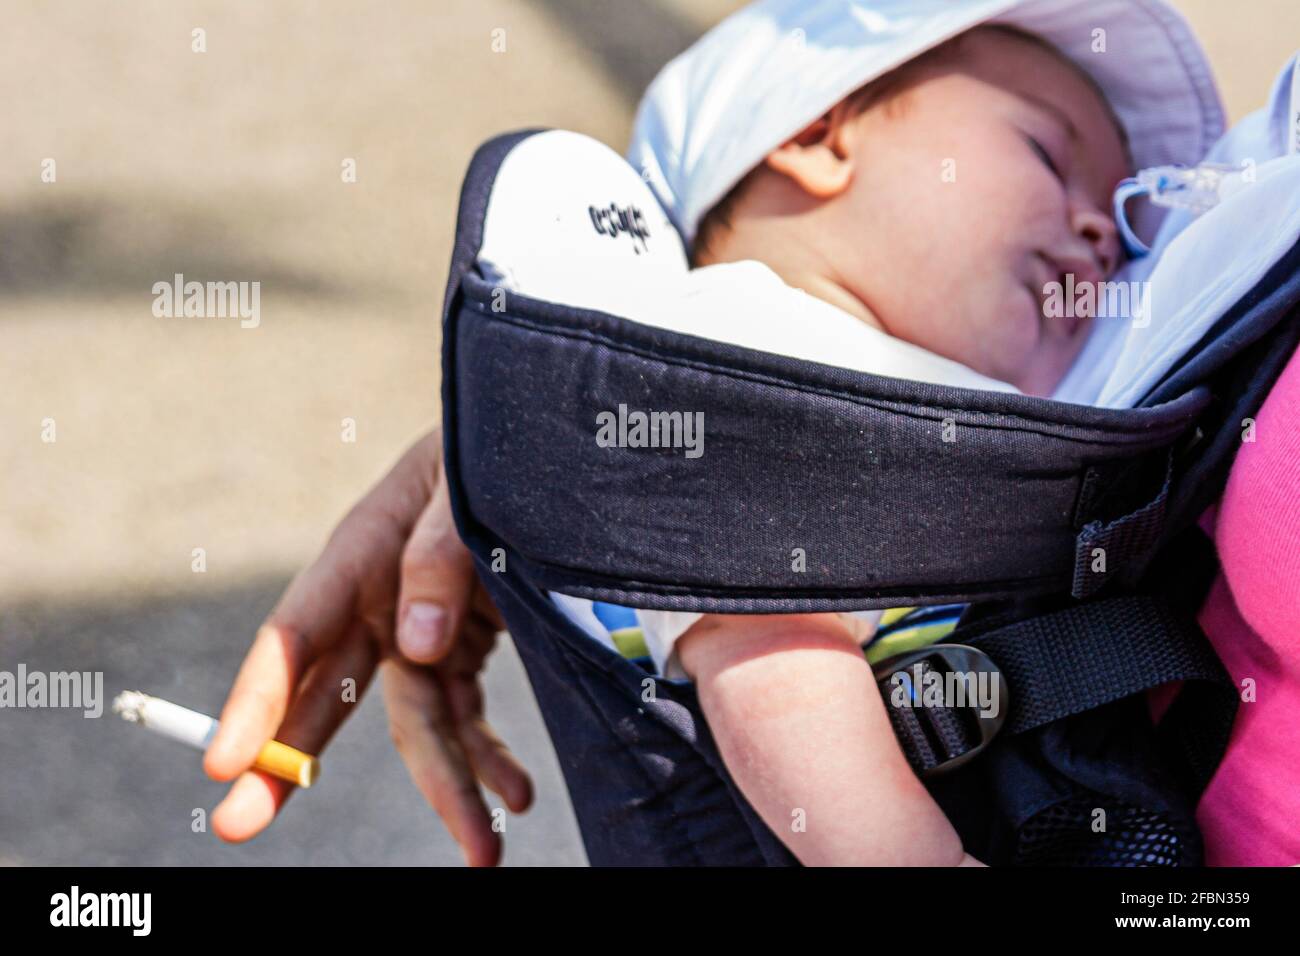 Miami Beach Florida,sleeping baby child mother holding cigarette,smoking secondhand second hand smoke, Stock Photo